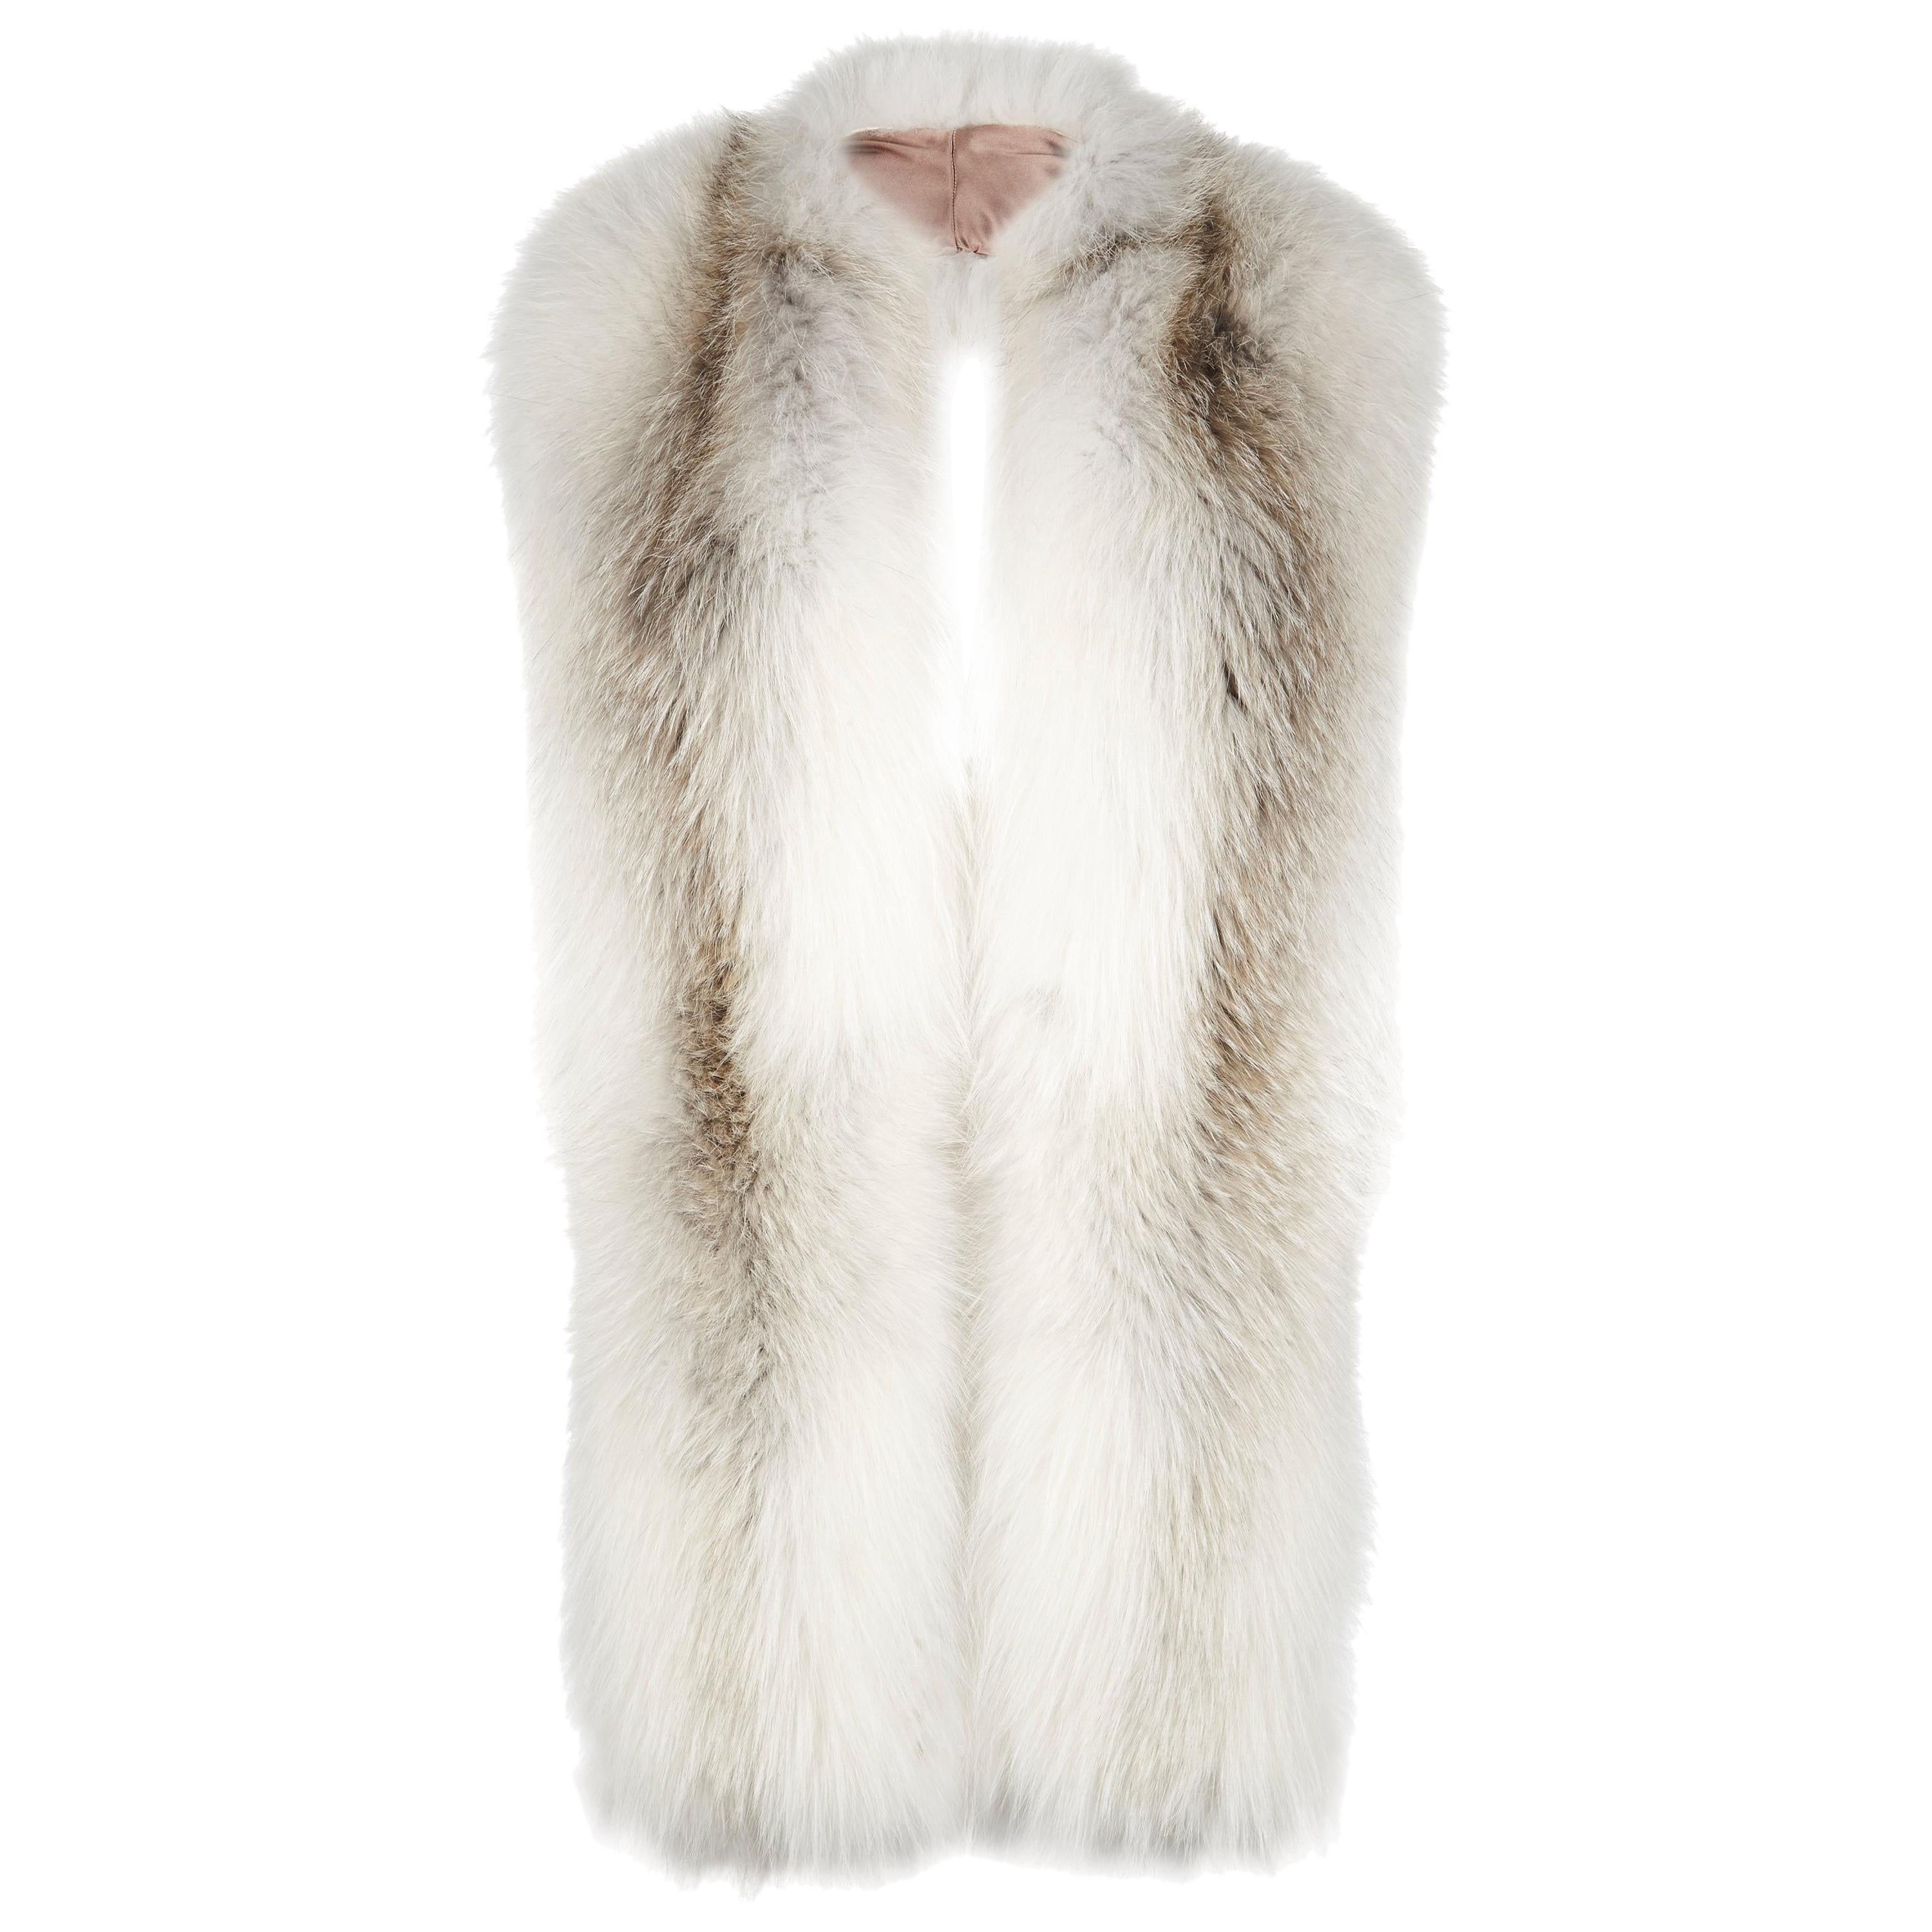 Verheyen London Legacy Stole in Natural Fawn Light Fox Fur - Silk &Monogramming 